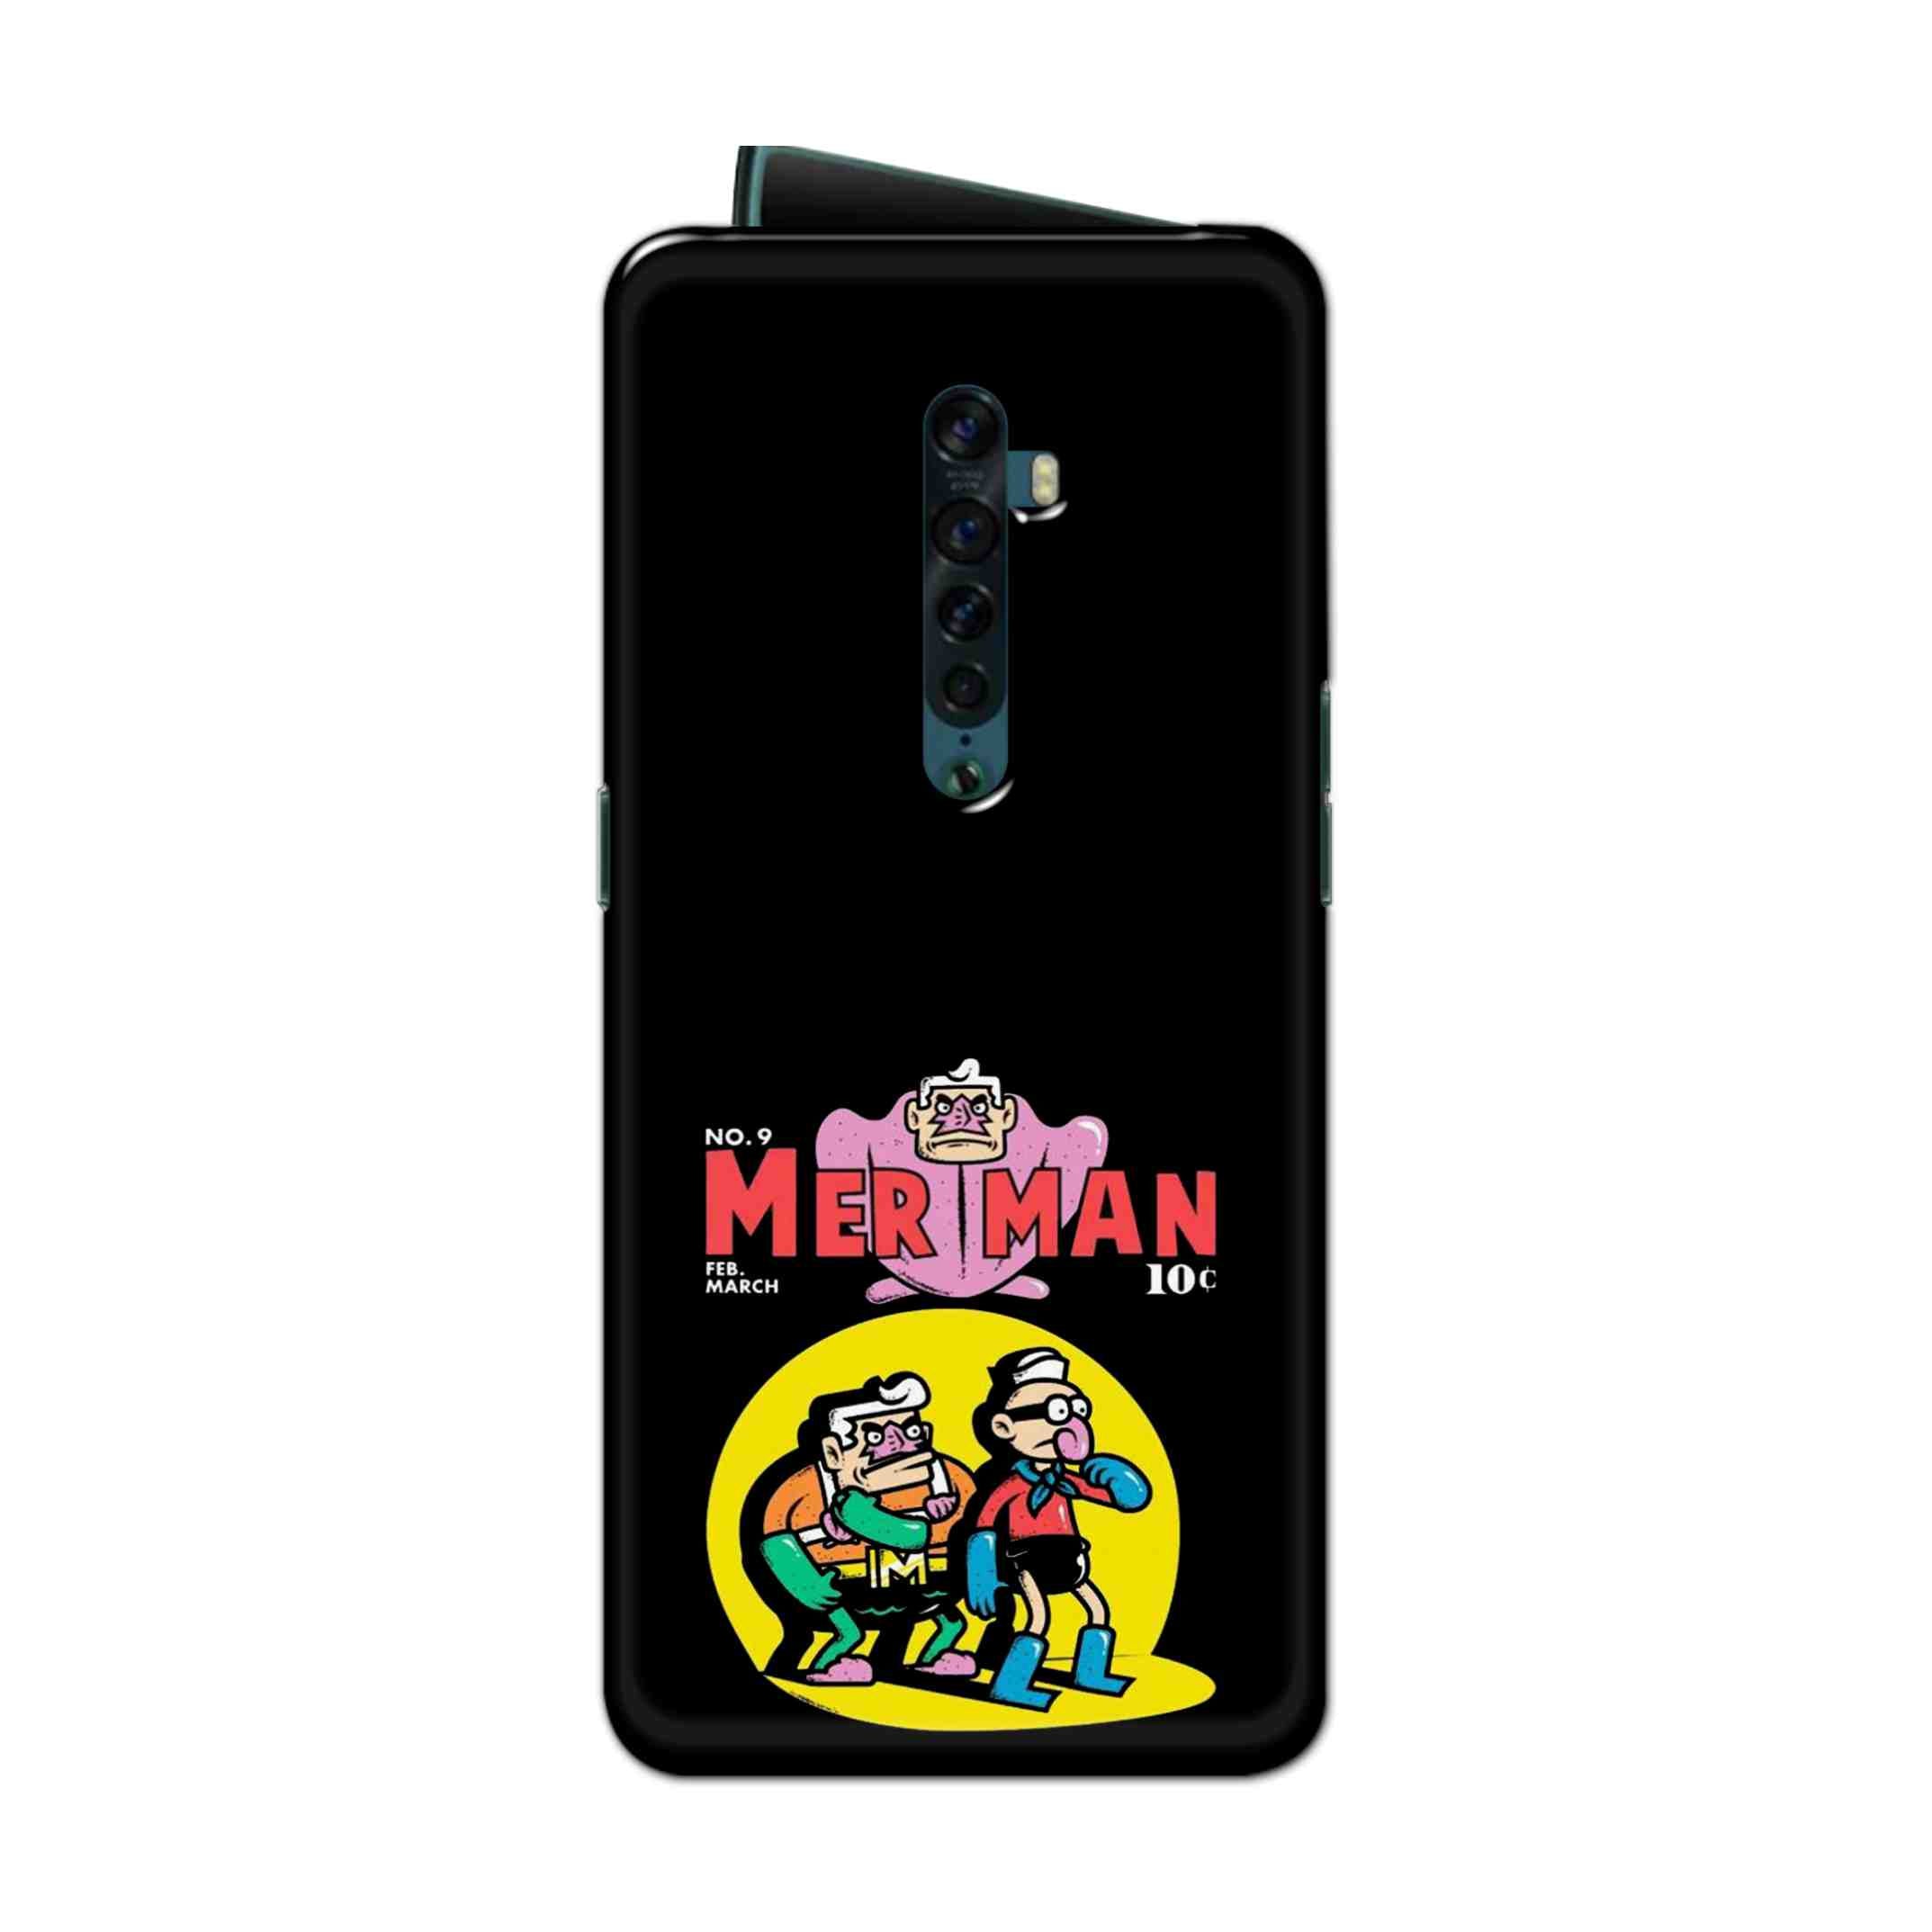 Buy Merman Hard Back Mobile Phone Case Cover For Oppo Reno 2 Online